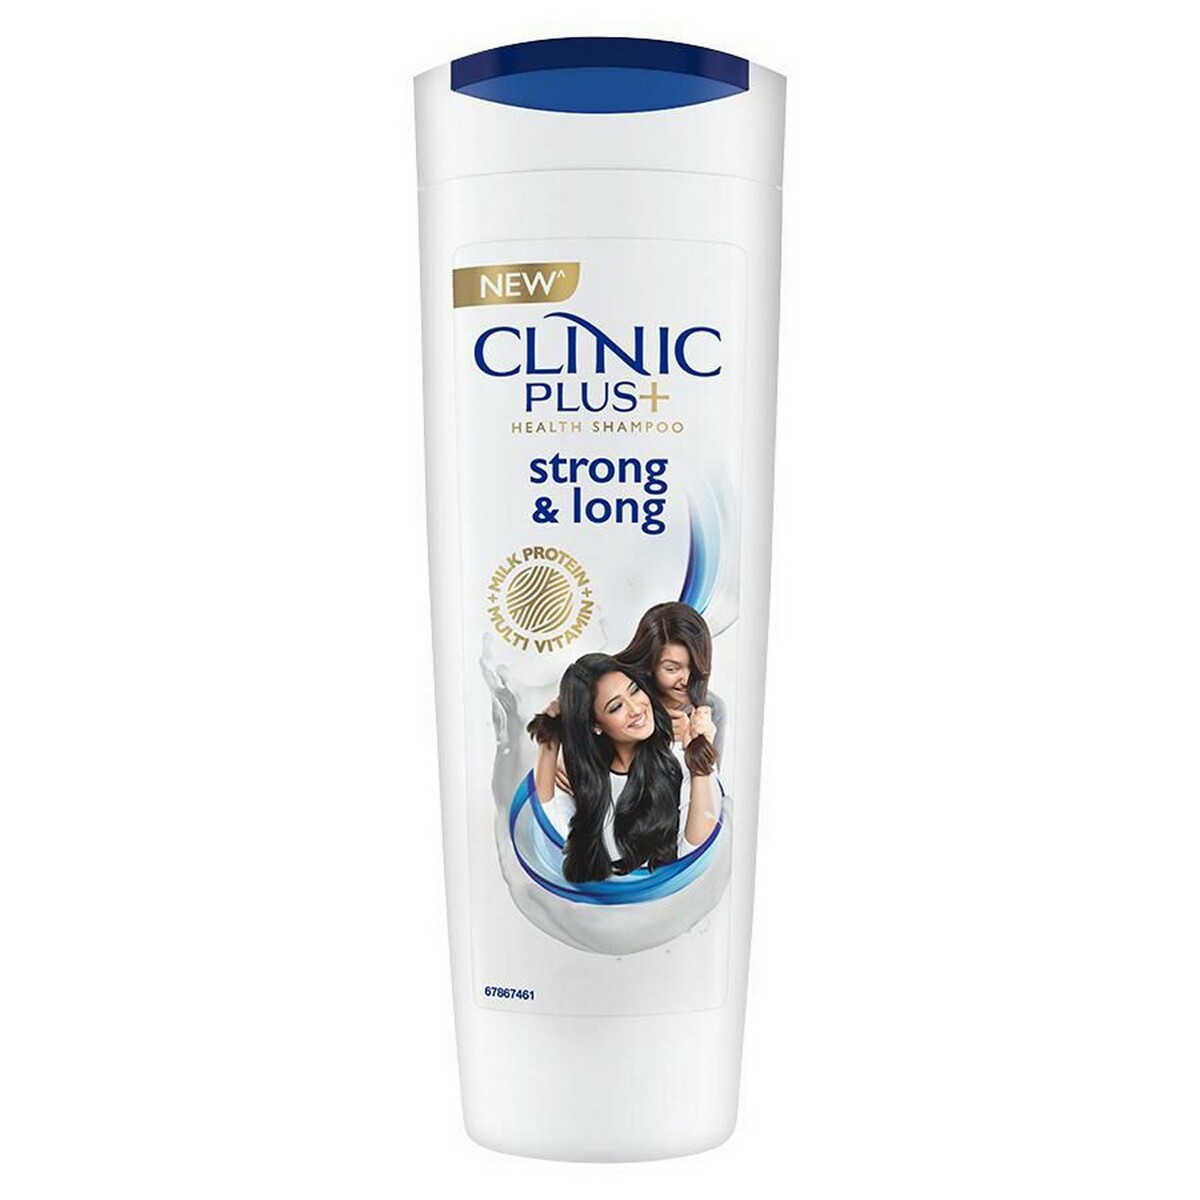 Clinic Strong & Long Health Shampoo 175ml